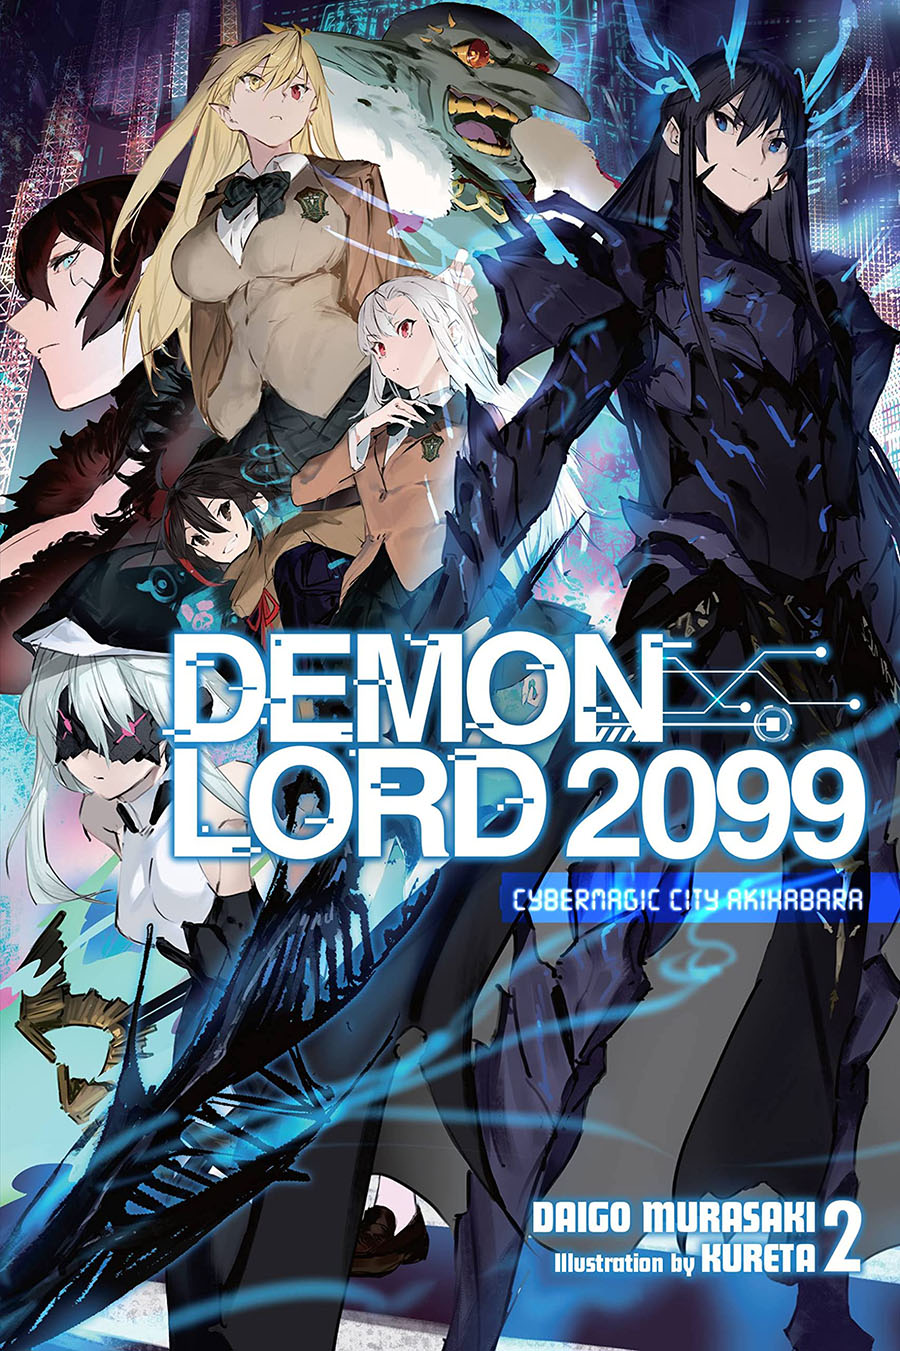 Demon Lord 2099 Light Novel Vol 2 Cybermagic City Akihabara